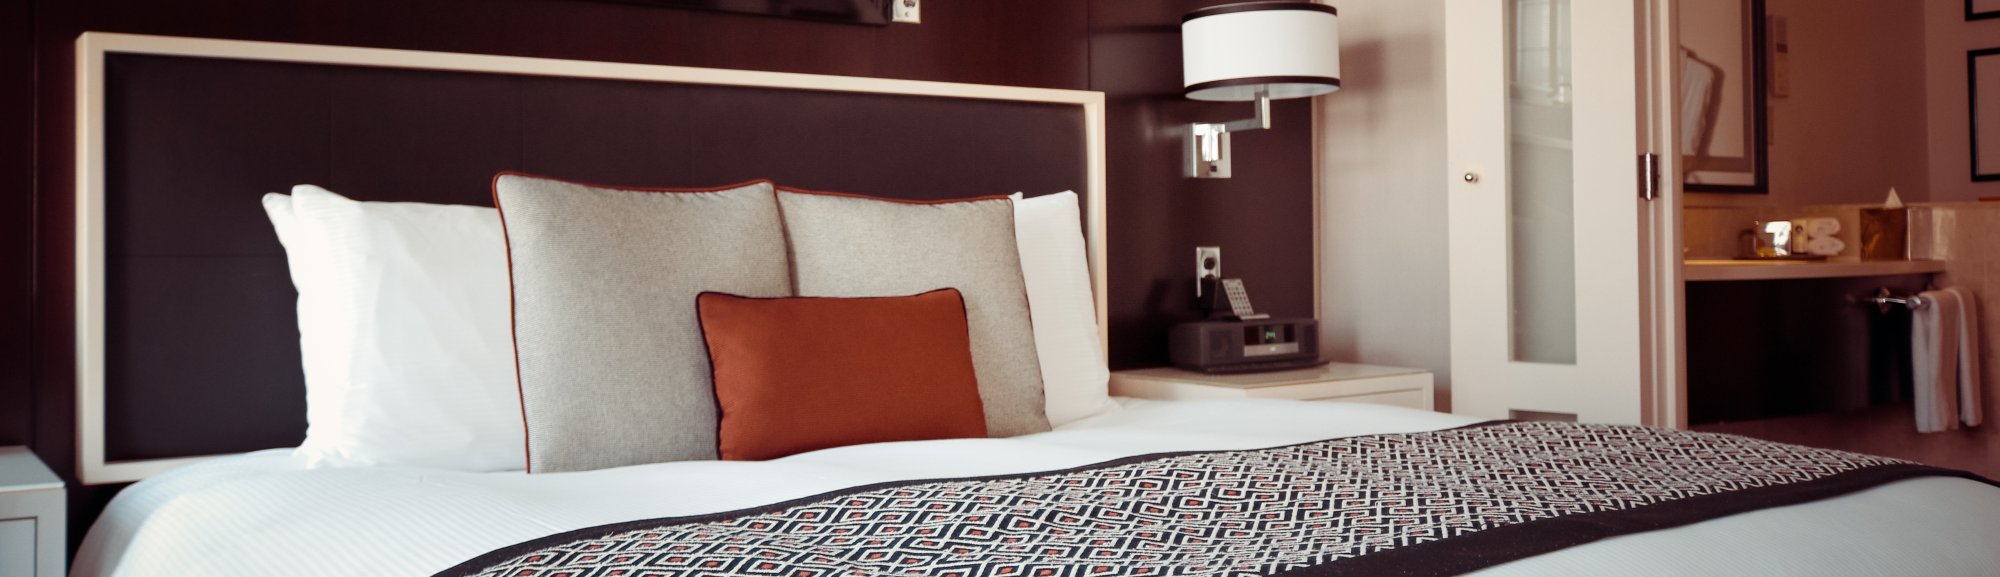 Posada Palermo Bed and Breakfast en-suite